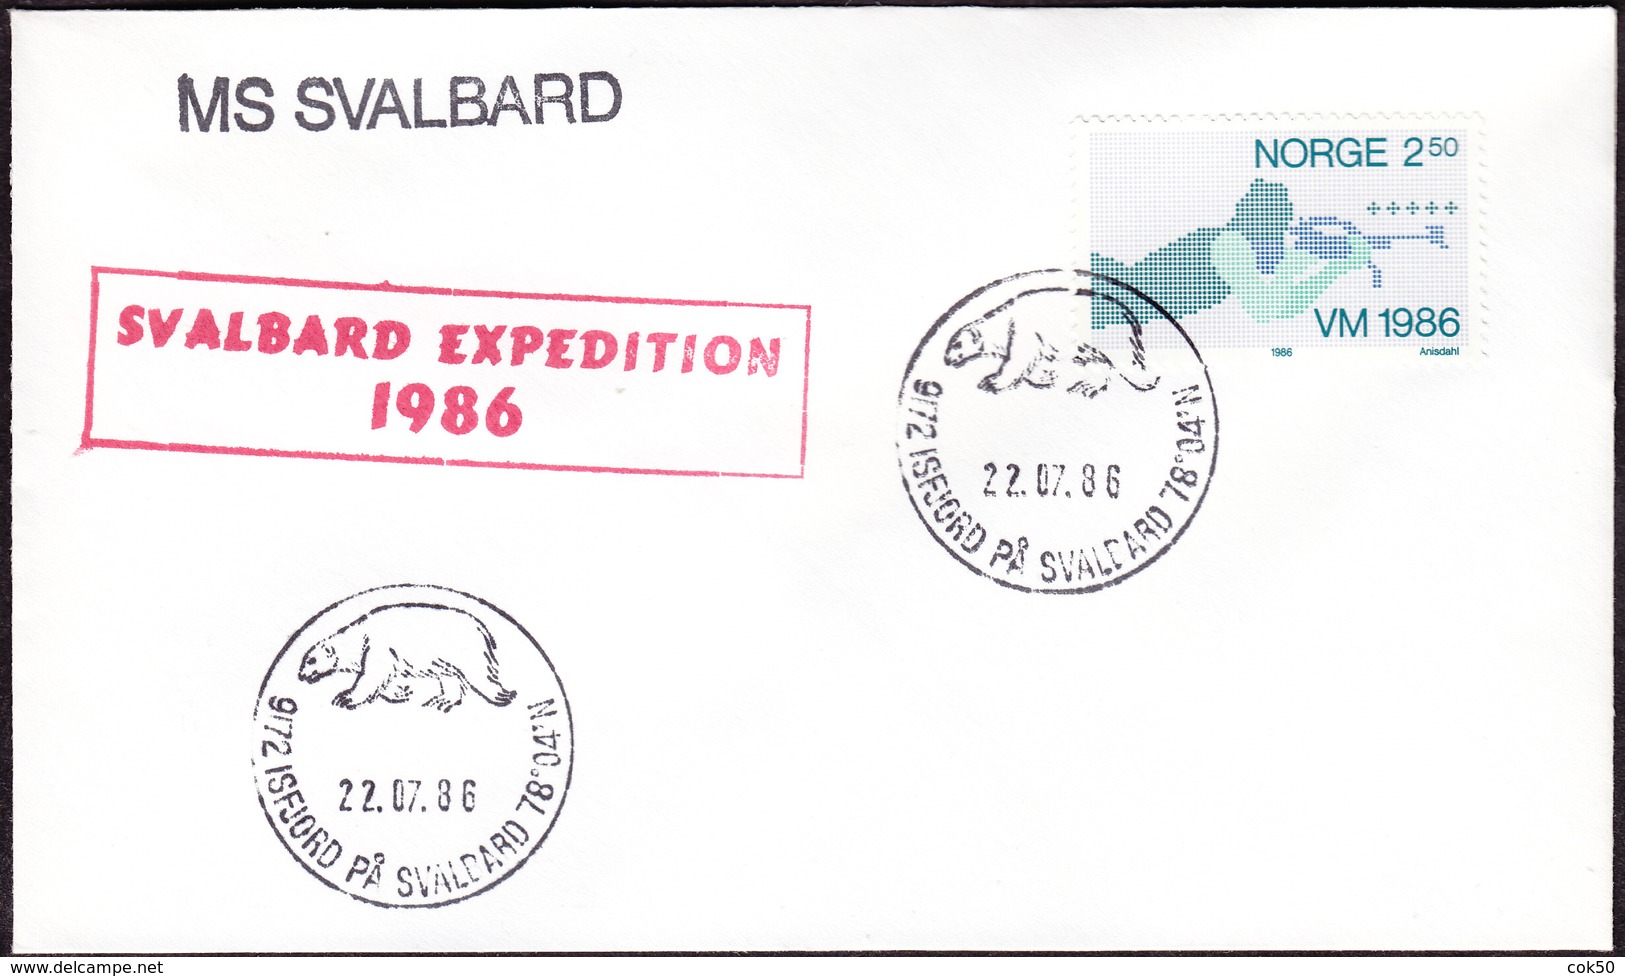 NORWAY - M/S "Svalbard" Expedition 1986, 9172 Isfjord At Svalbard 22.07.86 (icebear) - Arctic Tierwelt